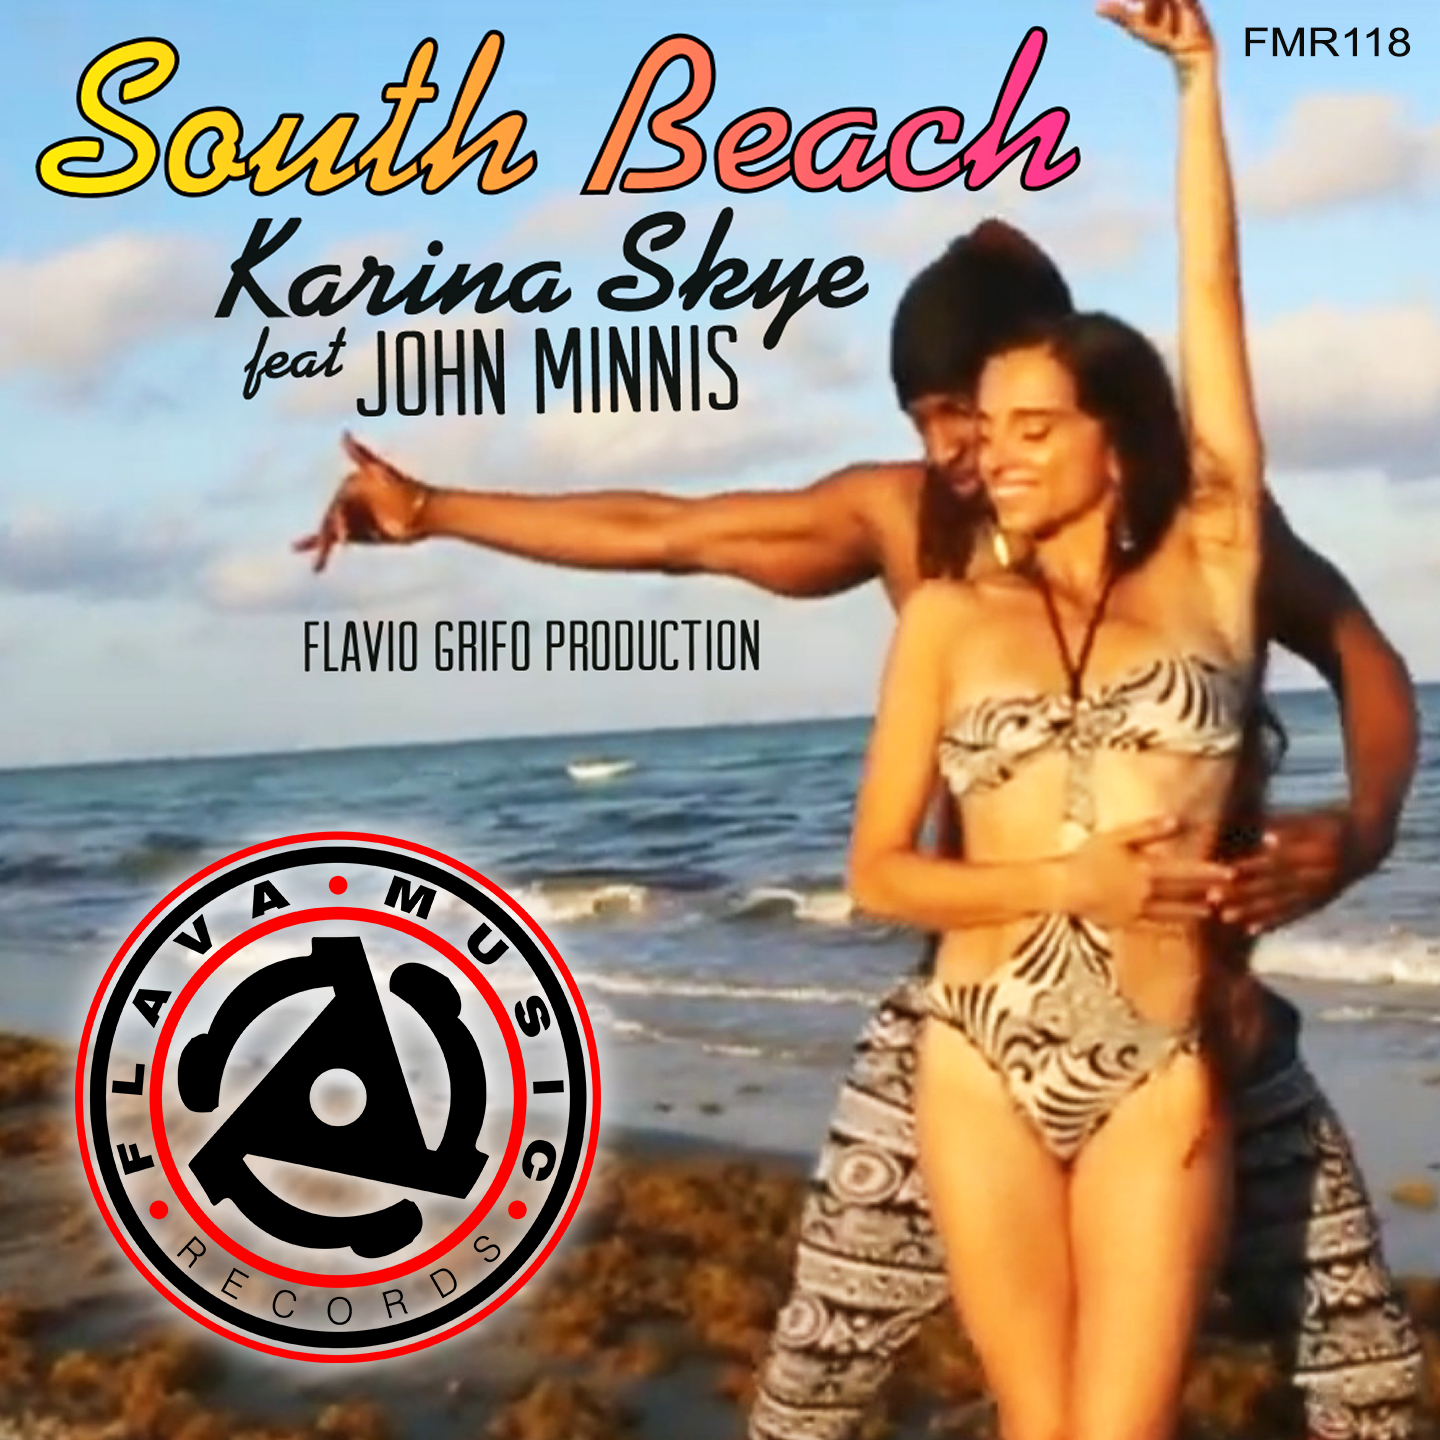 South Beach - Karina Skye feat Minnis.jpg